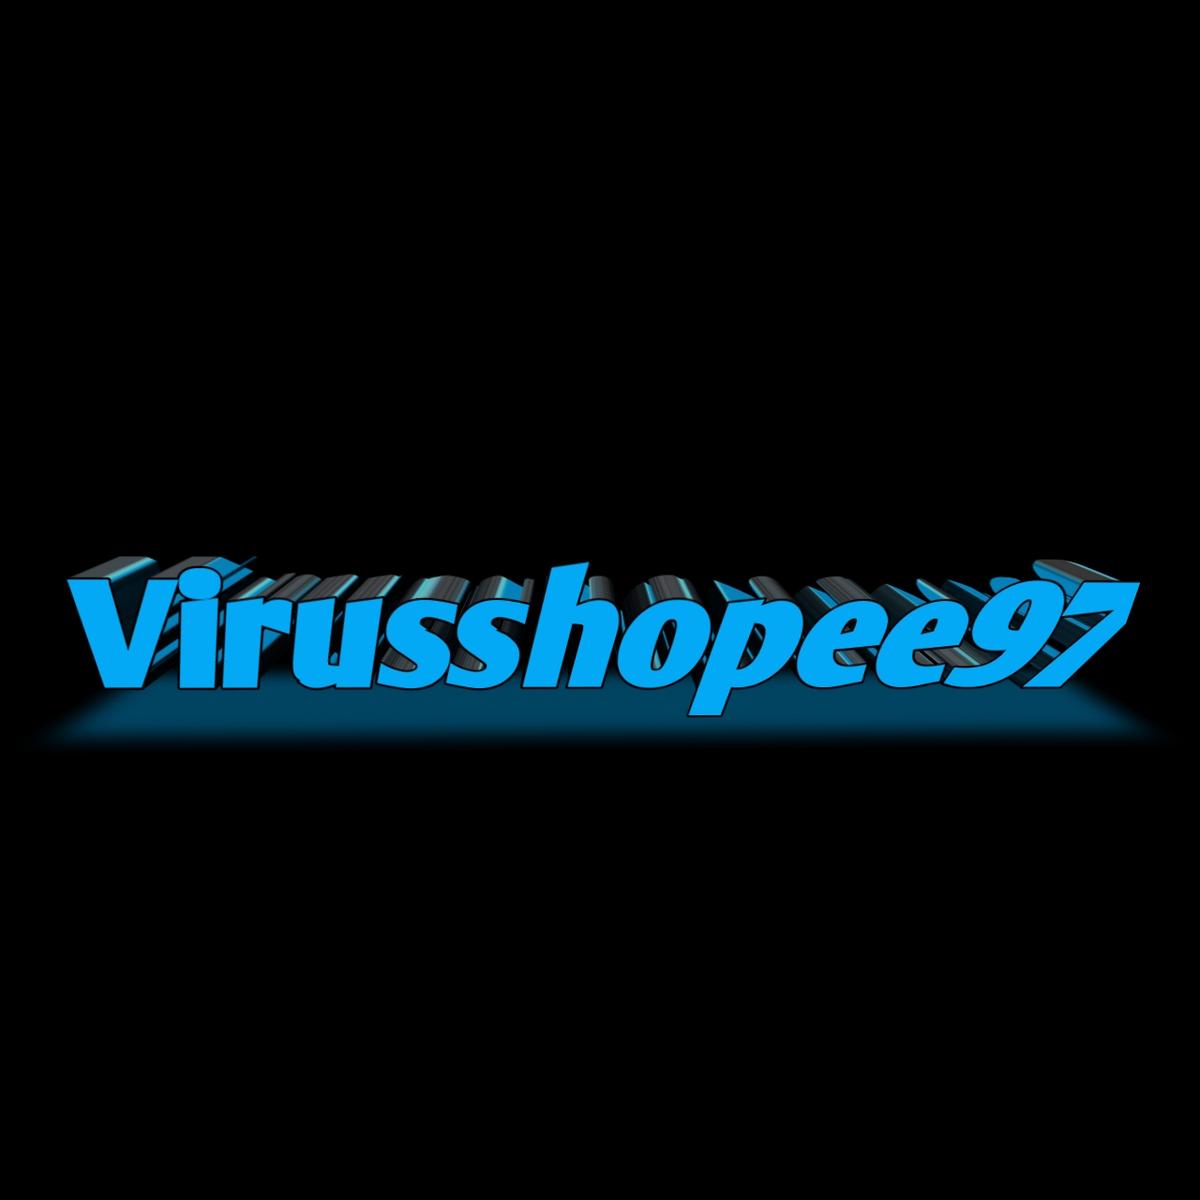 virusshopee97's images